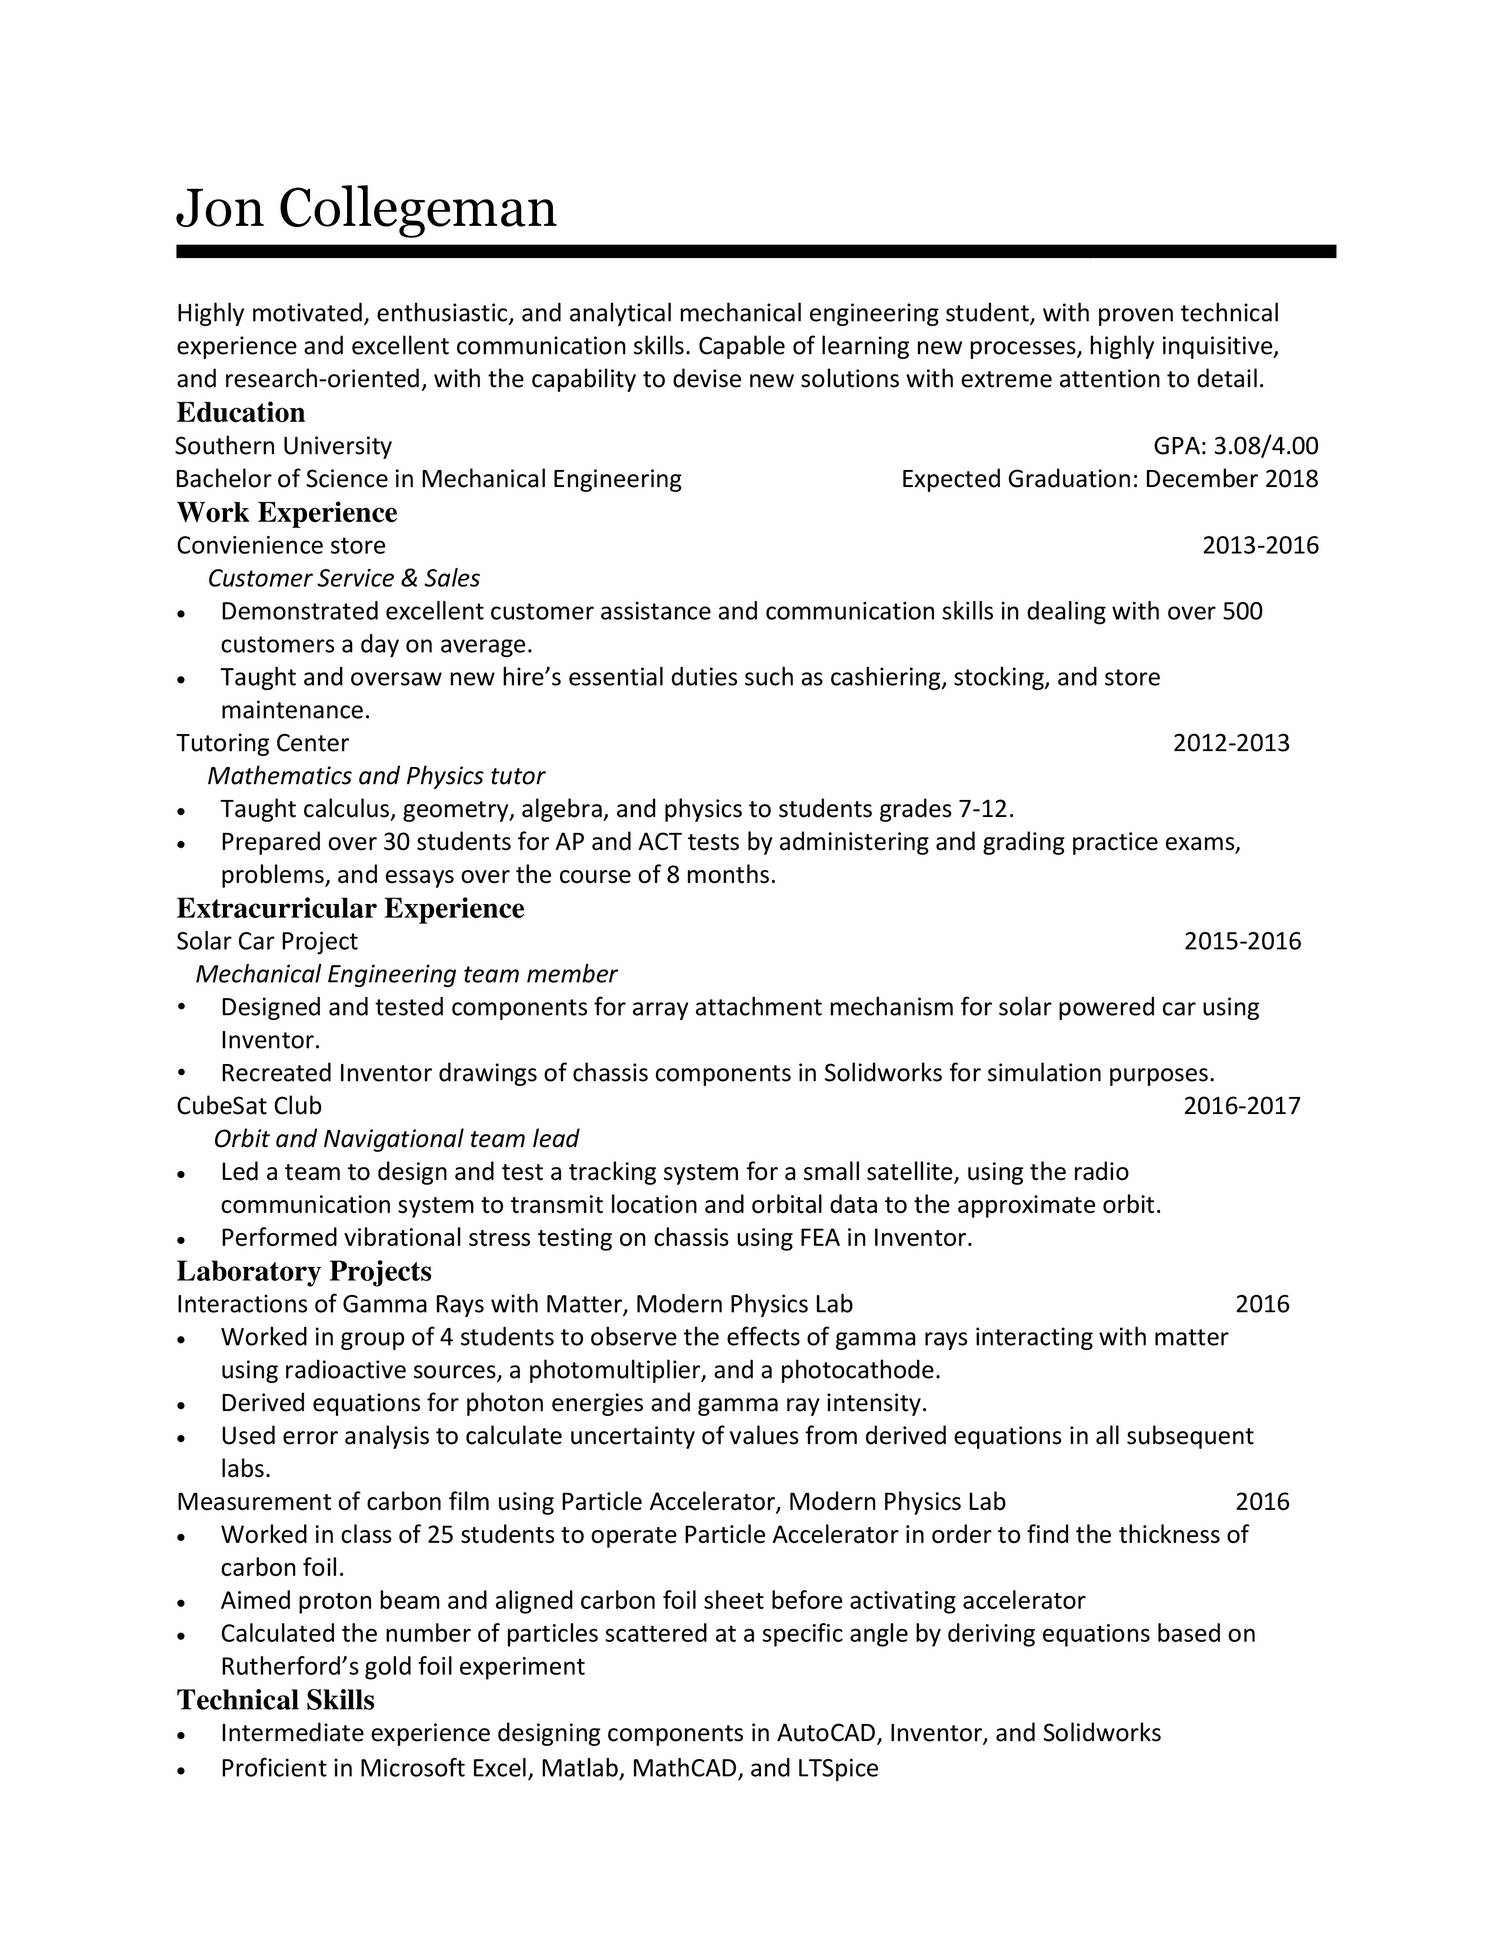 fake resume 2017 docx pdf